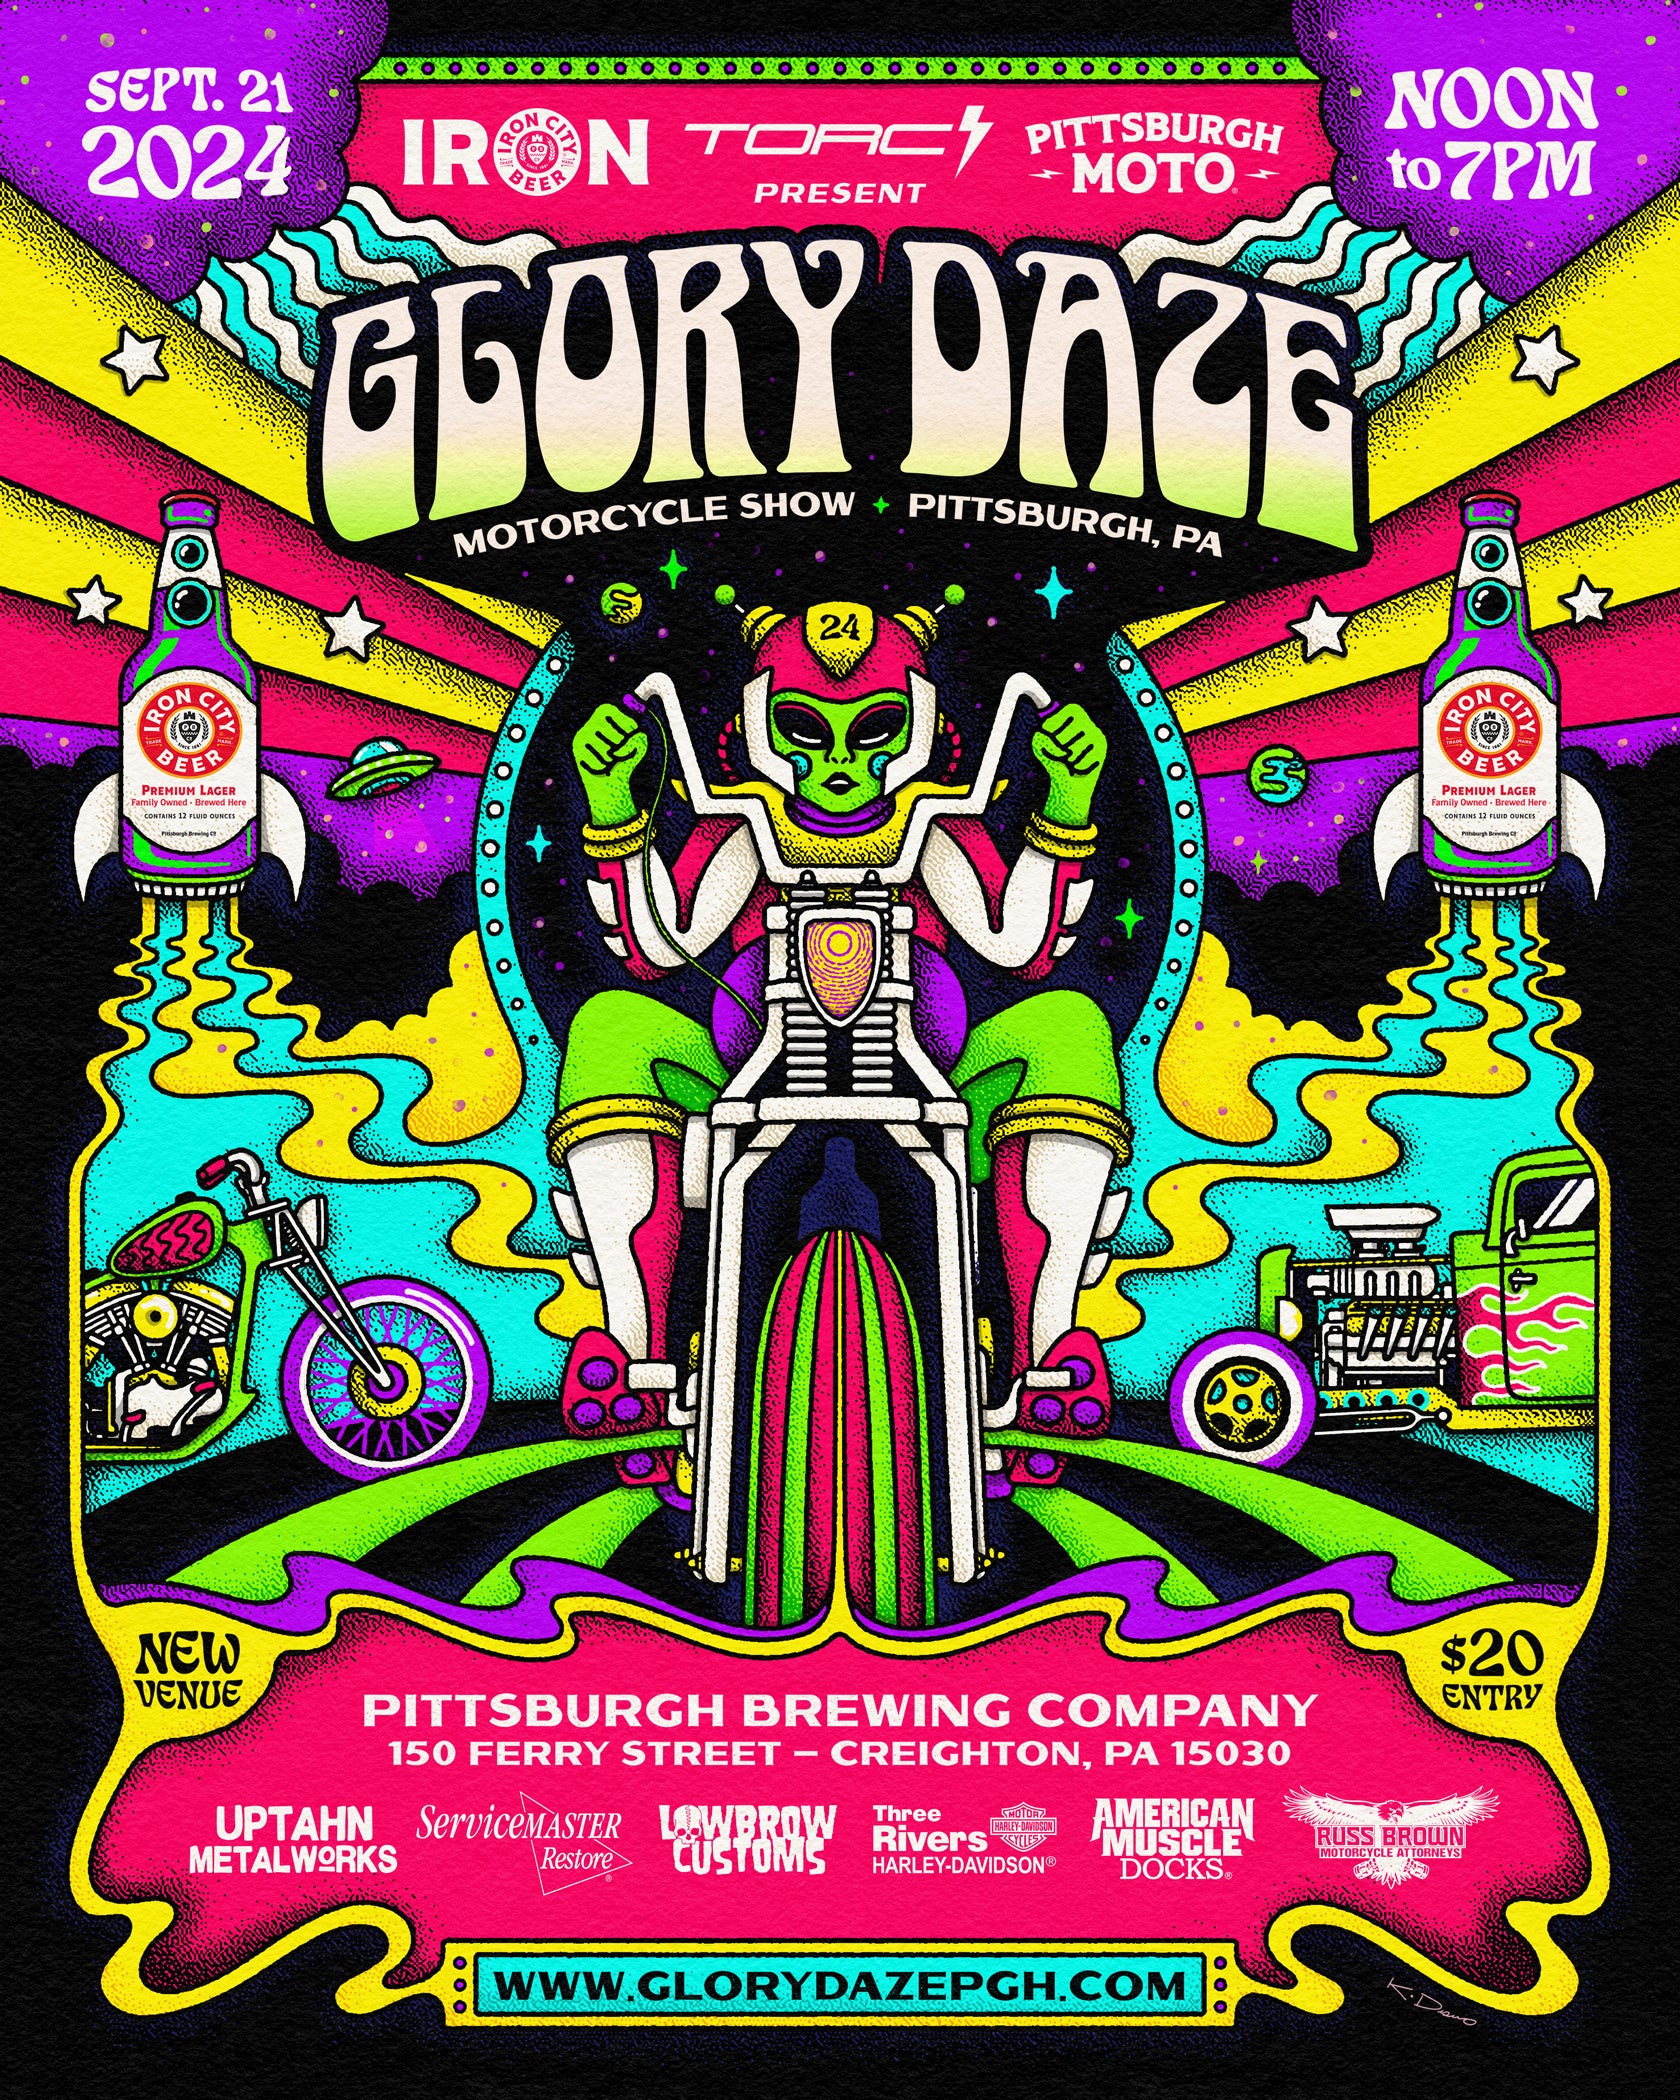 Kurt Diserio artist designer illustration poster Glory Daze motorcycle show pittsburgh